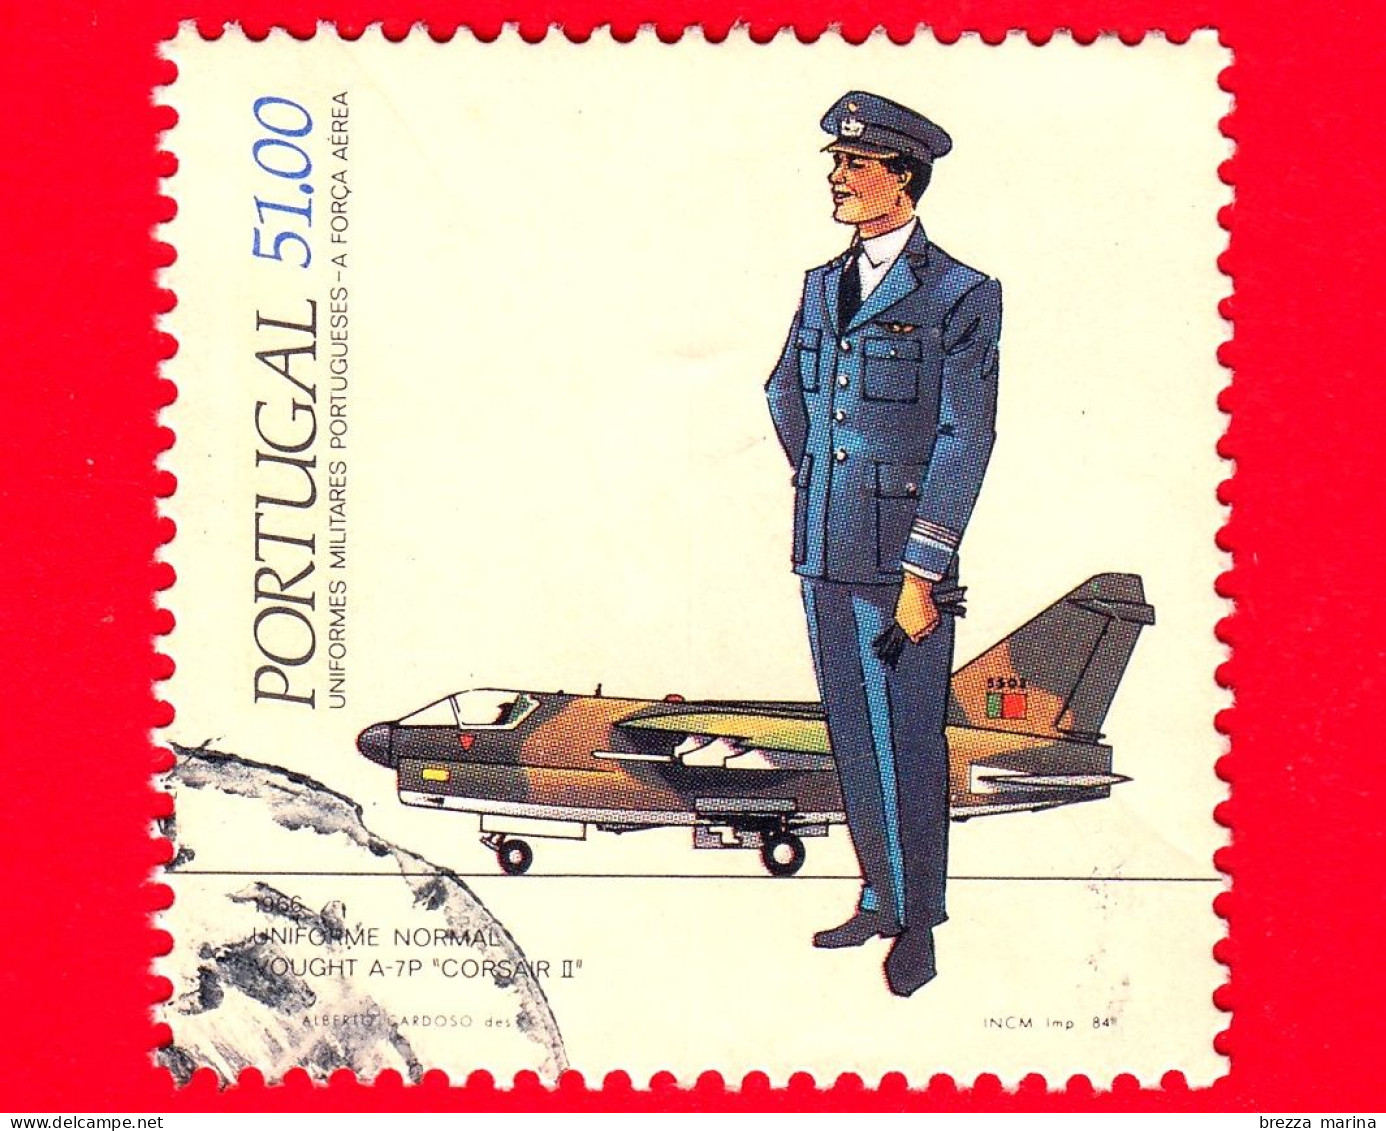 PORTOGALLO - Usato - 1984 - Uniformi Militari Portoghesi - Aeronautica - Corsair II - 51.00 - Gebruikt